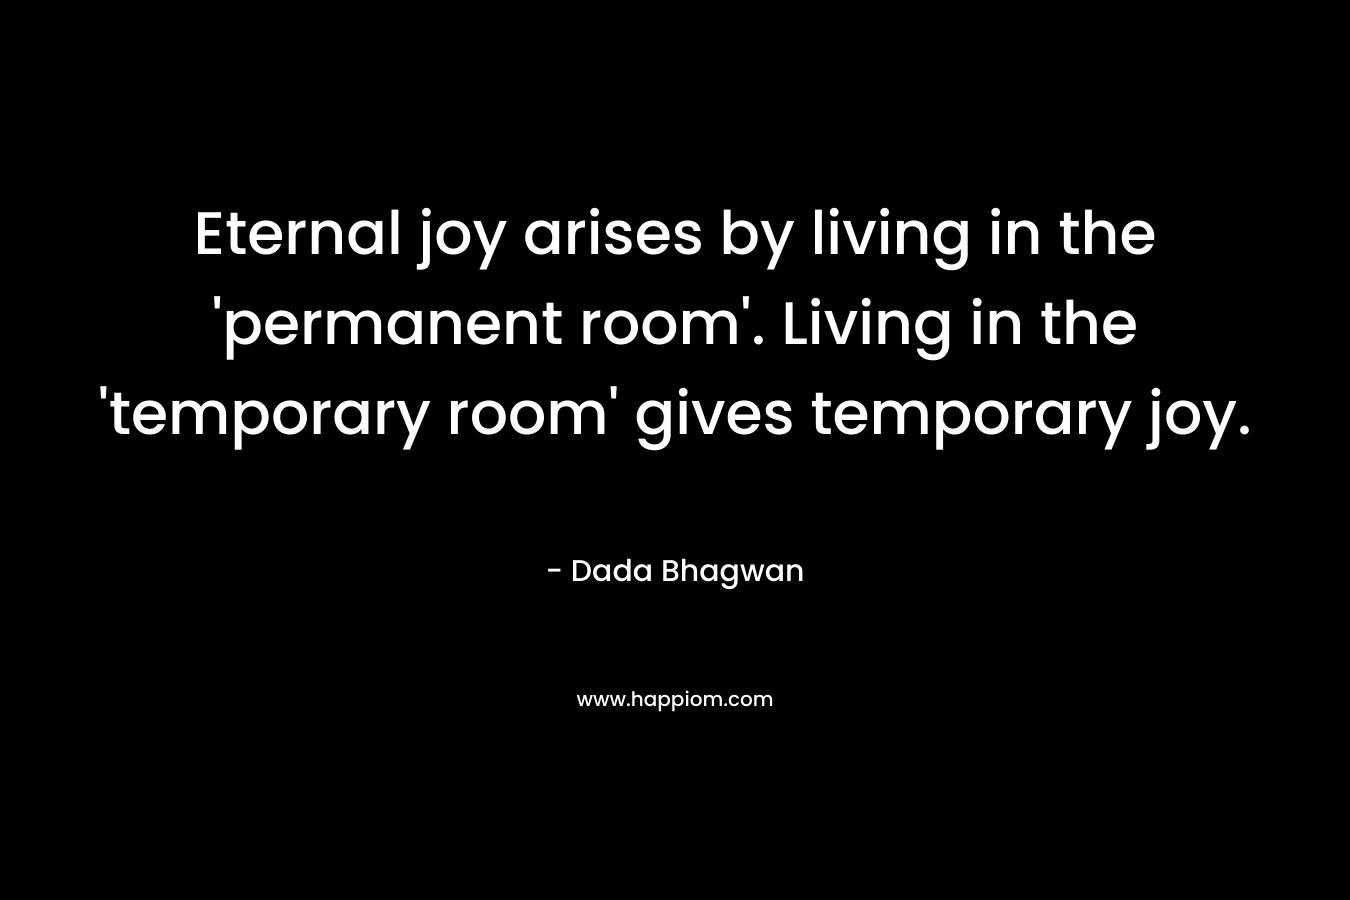 Eternal joy arises by living in the 'permanent room'. Living in the 'temporary room' gives temporary joy.